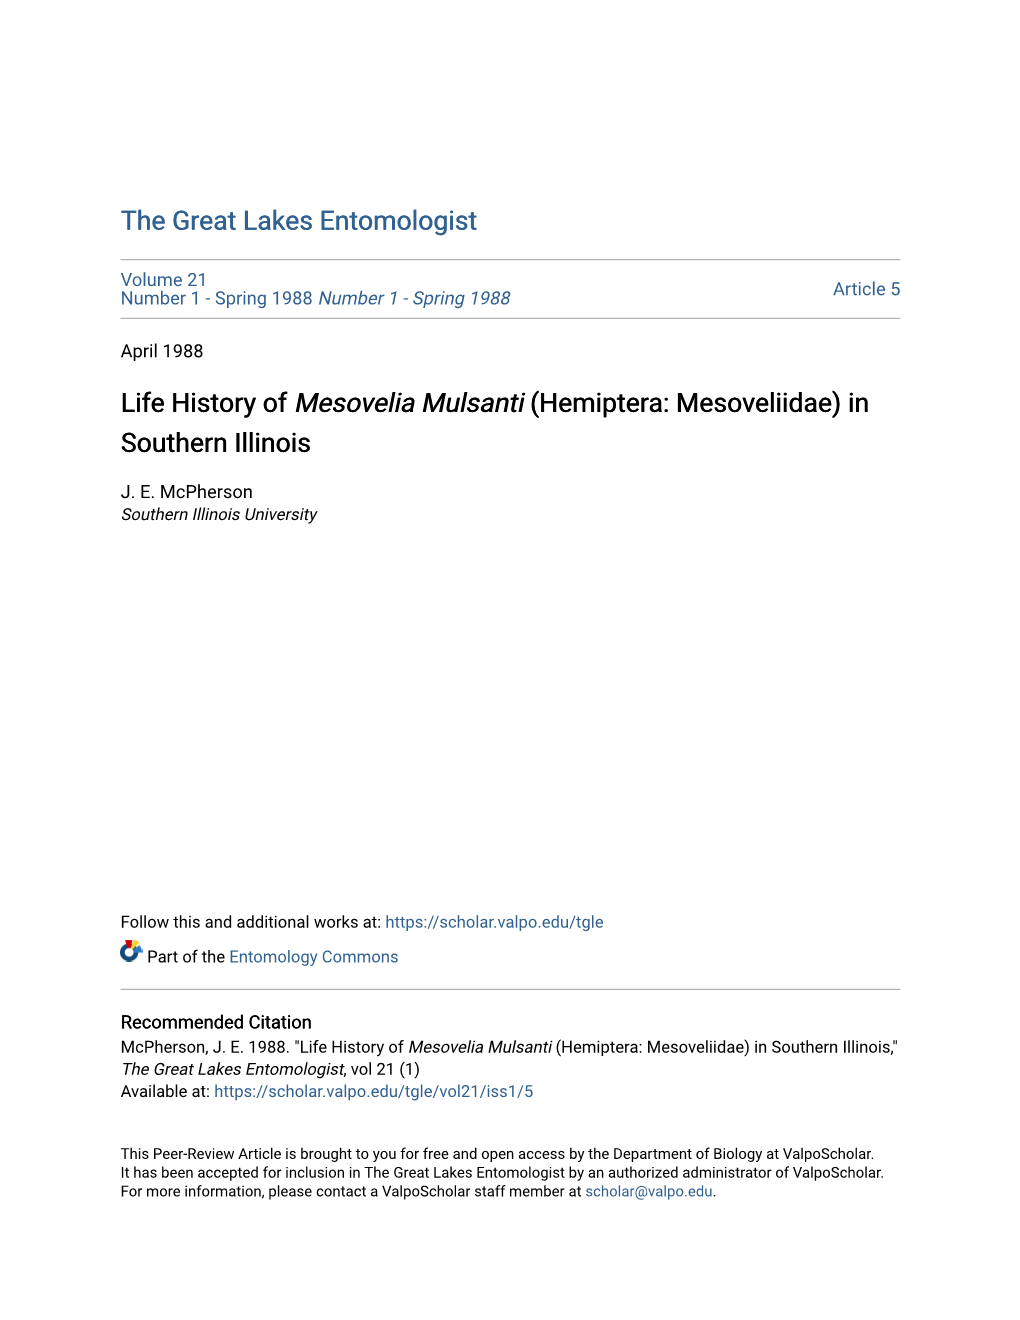 Life History of Mesovelia Mulsanti (Hemiptera: Mesoveliidae) in Southern Illinois